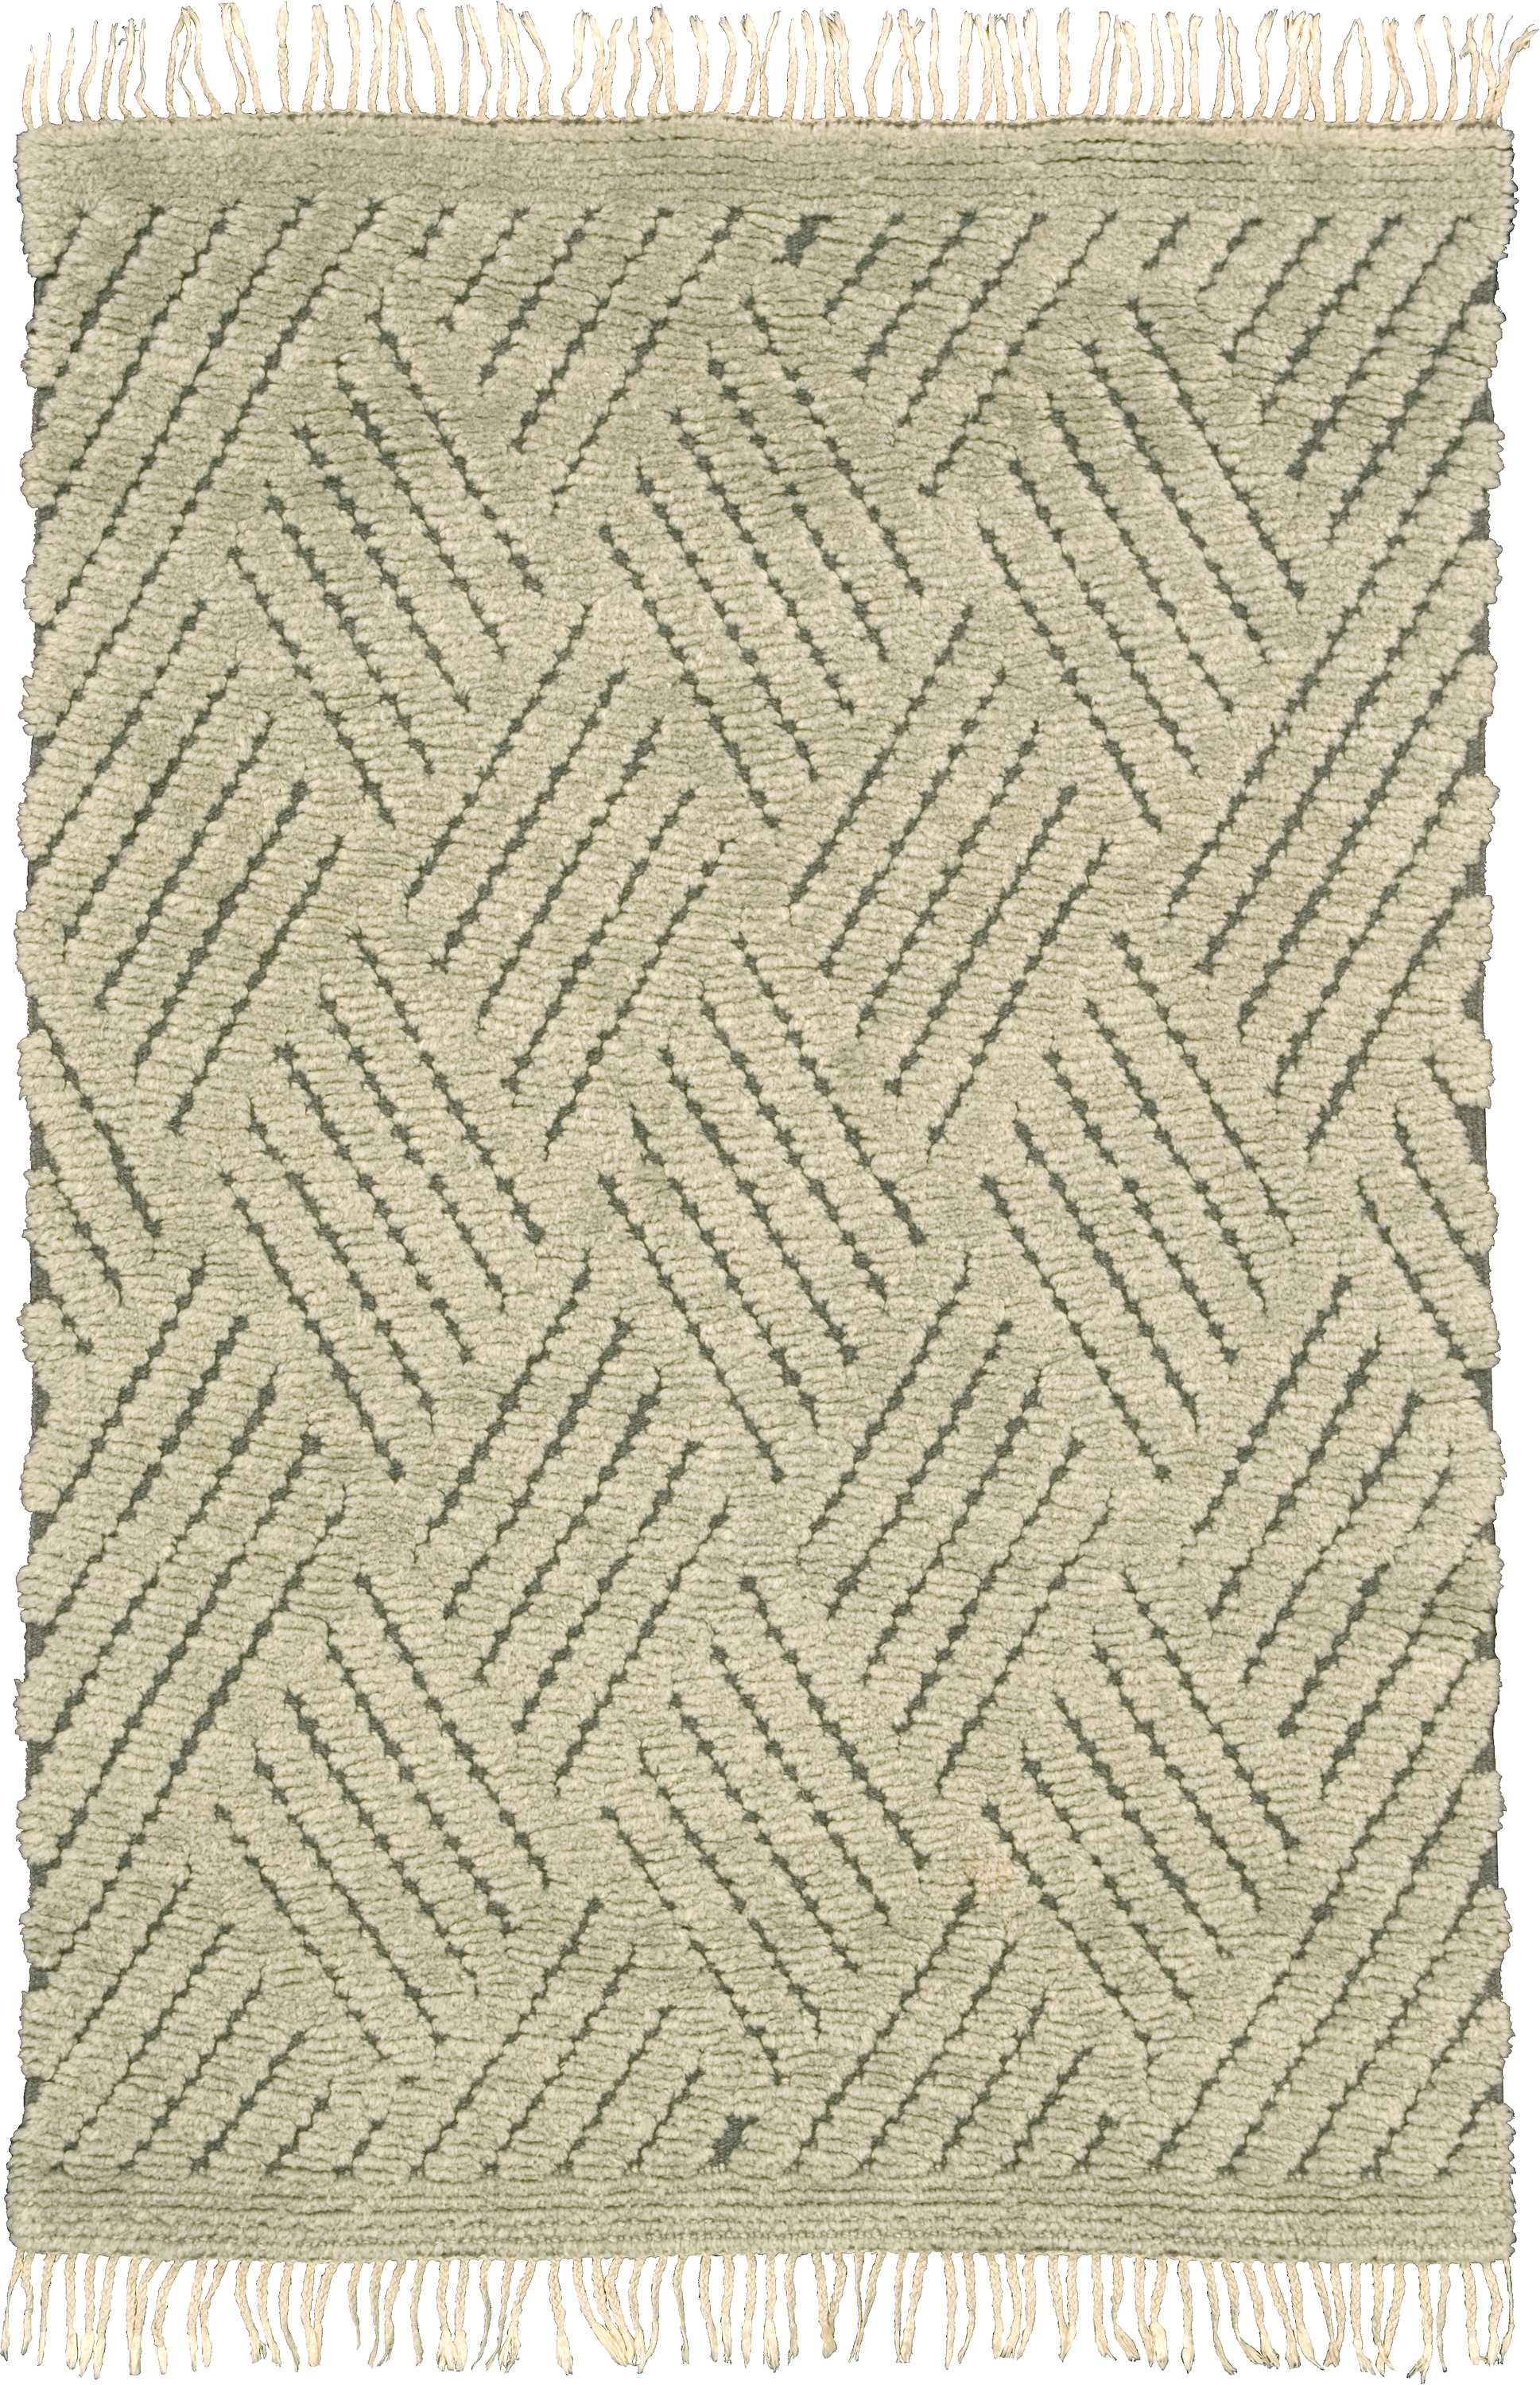 Stanza Design | Custom Swedish Rug | FJ Hakimian | Carpet Gallery in NY